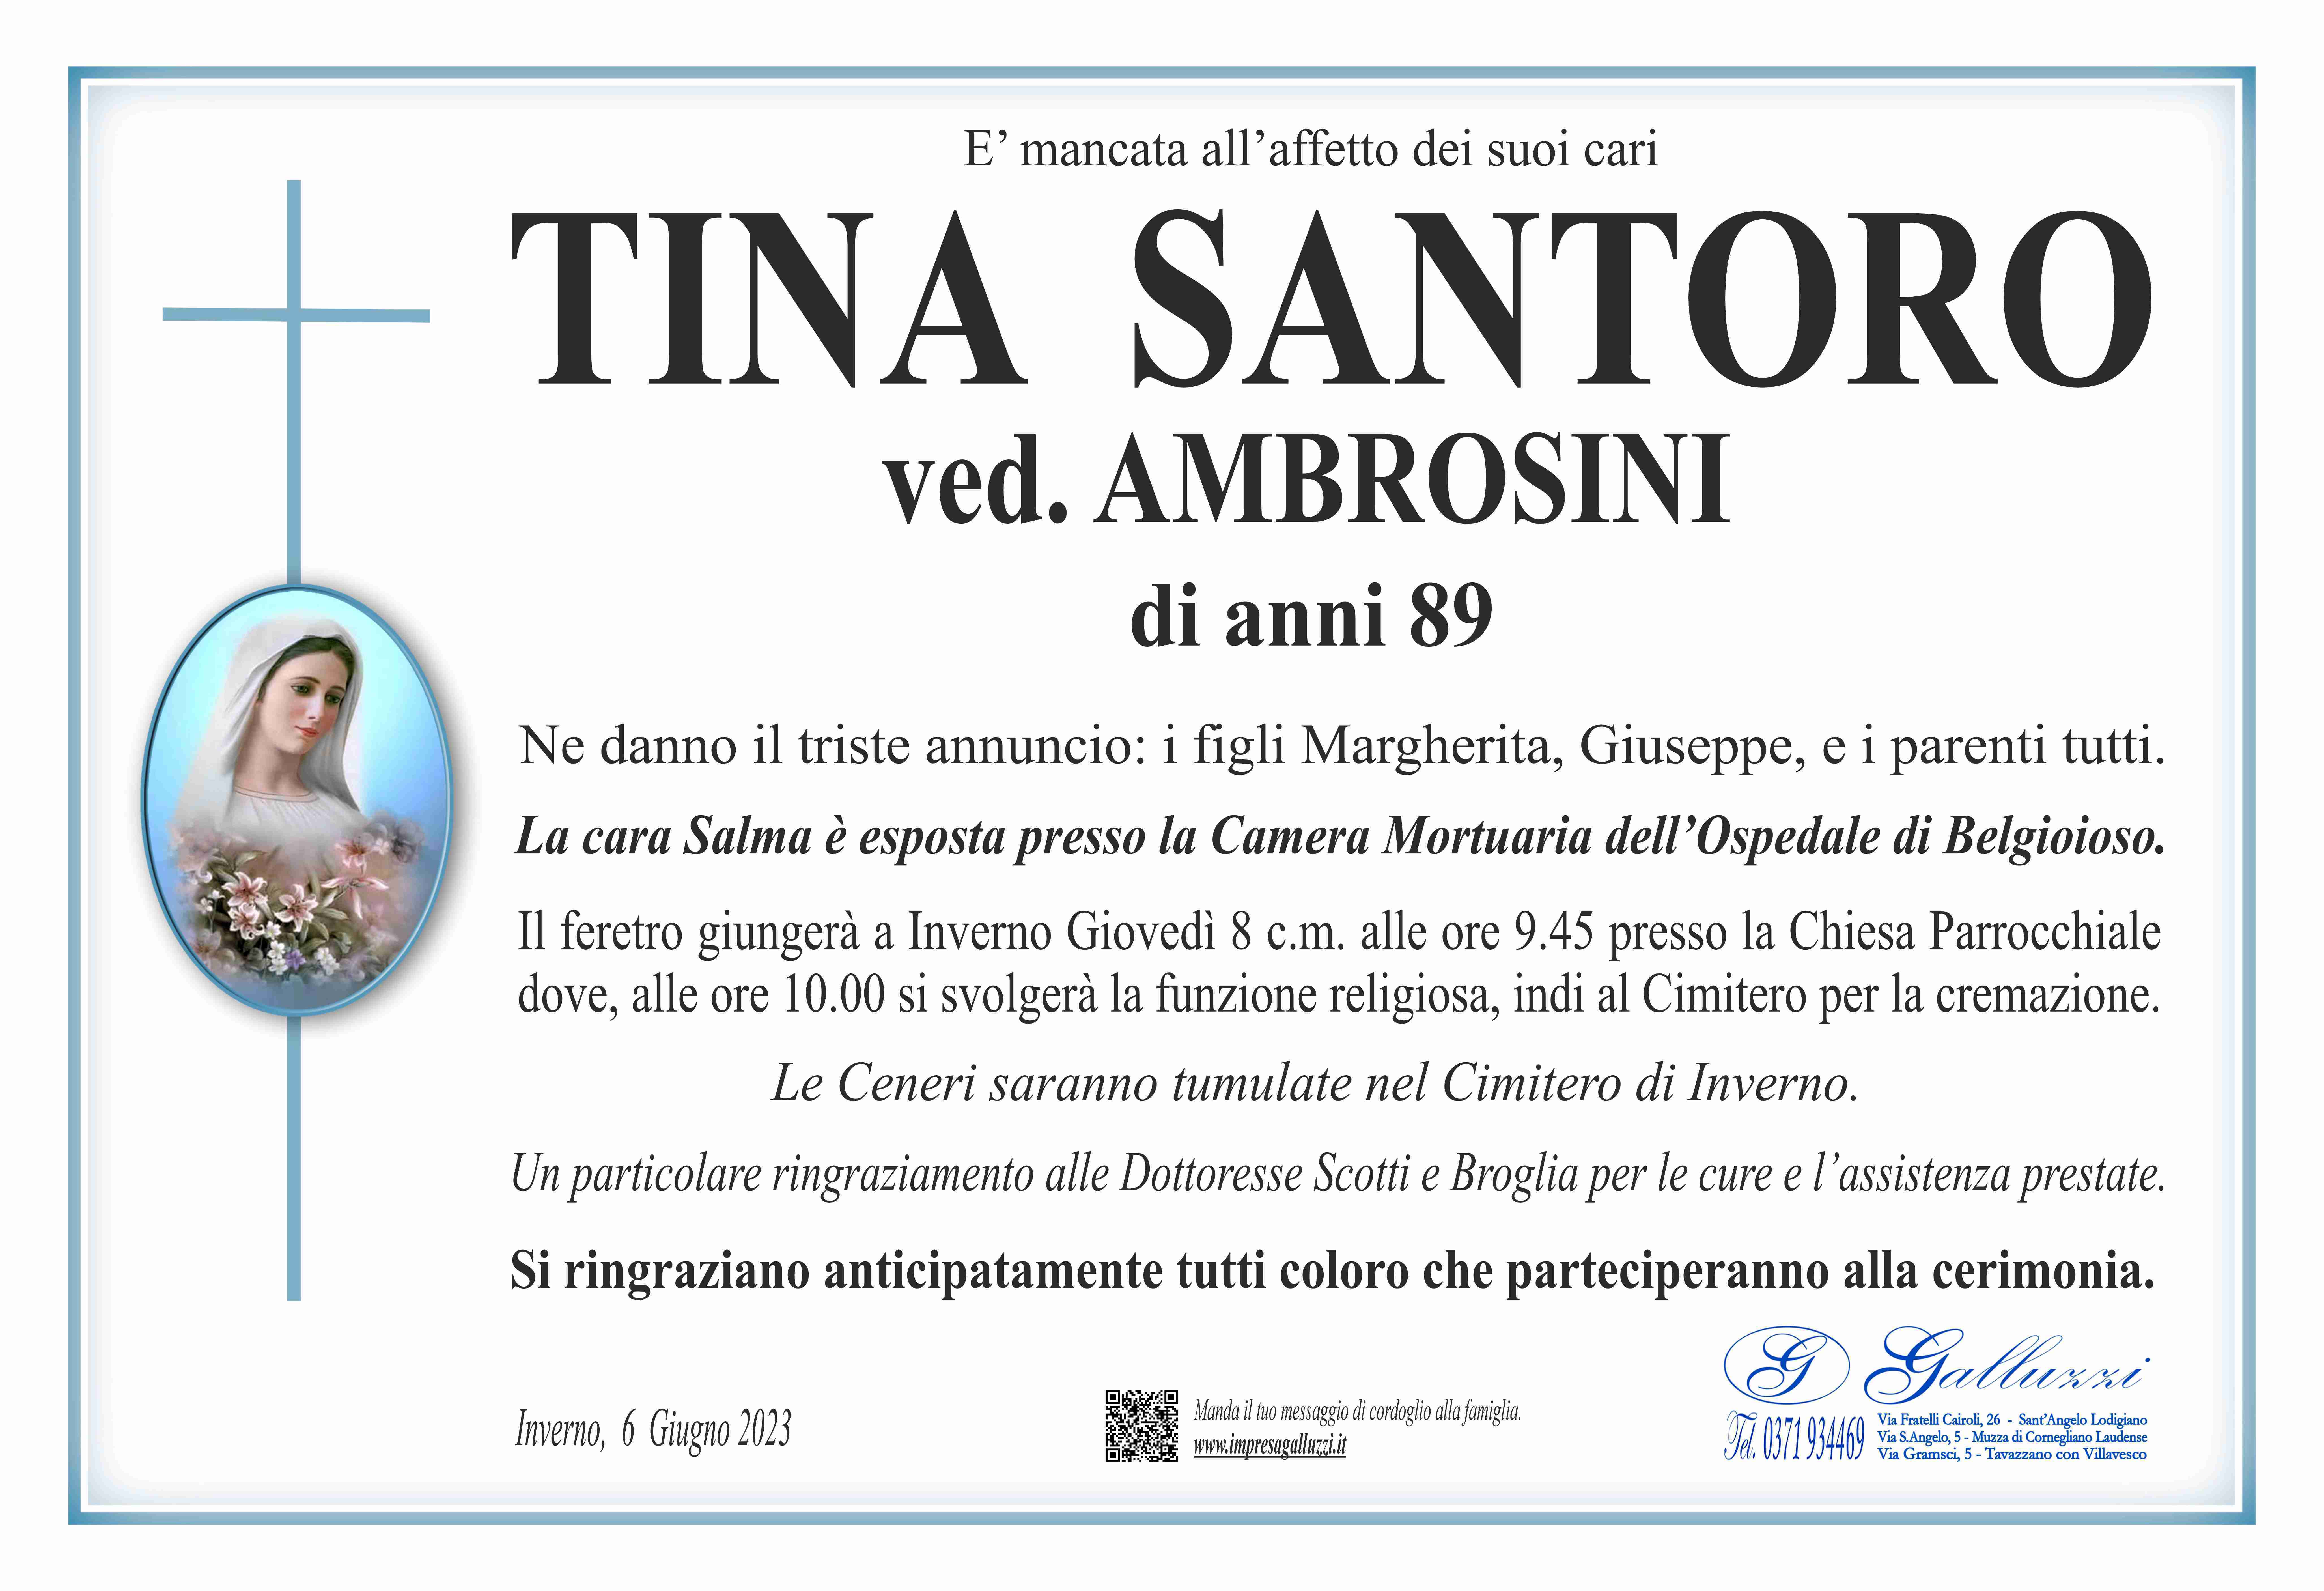 Tina Santoro